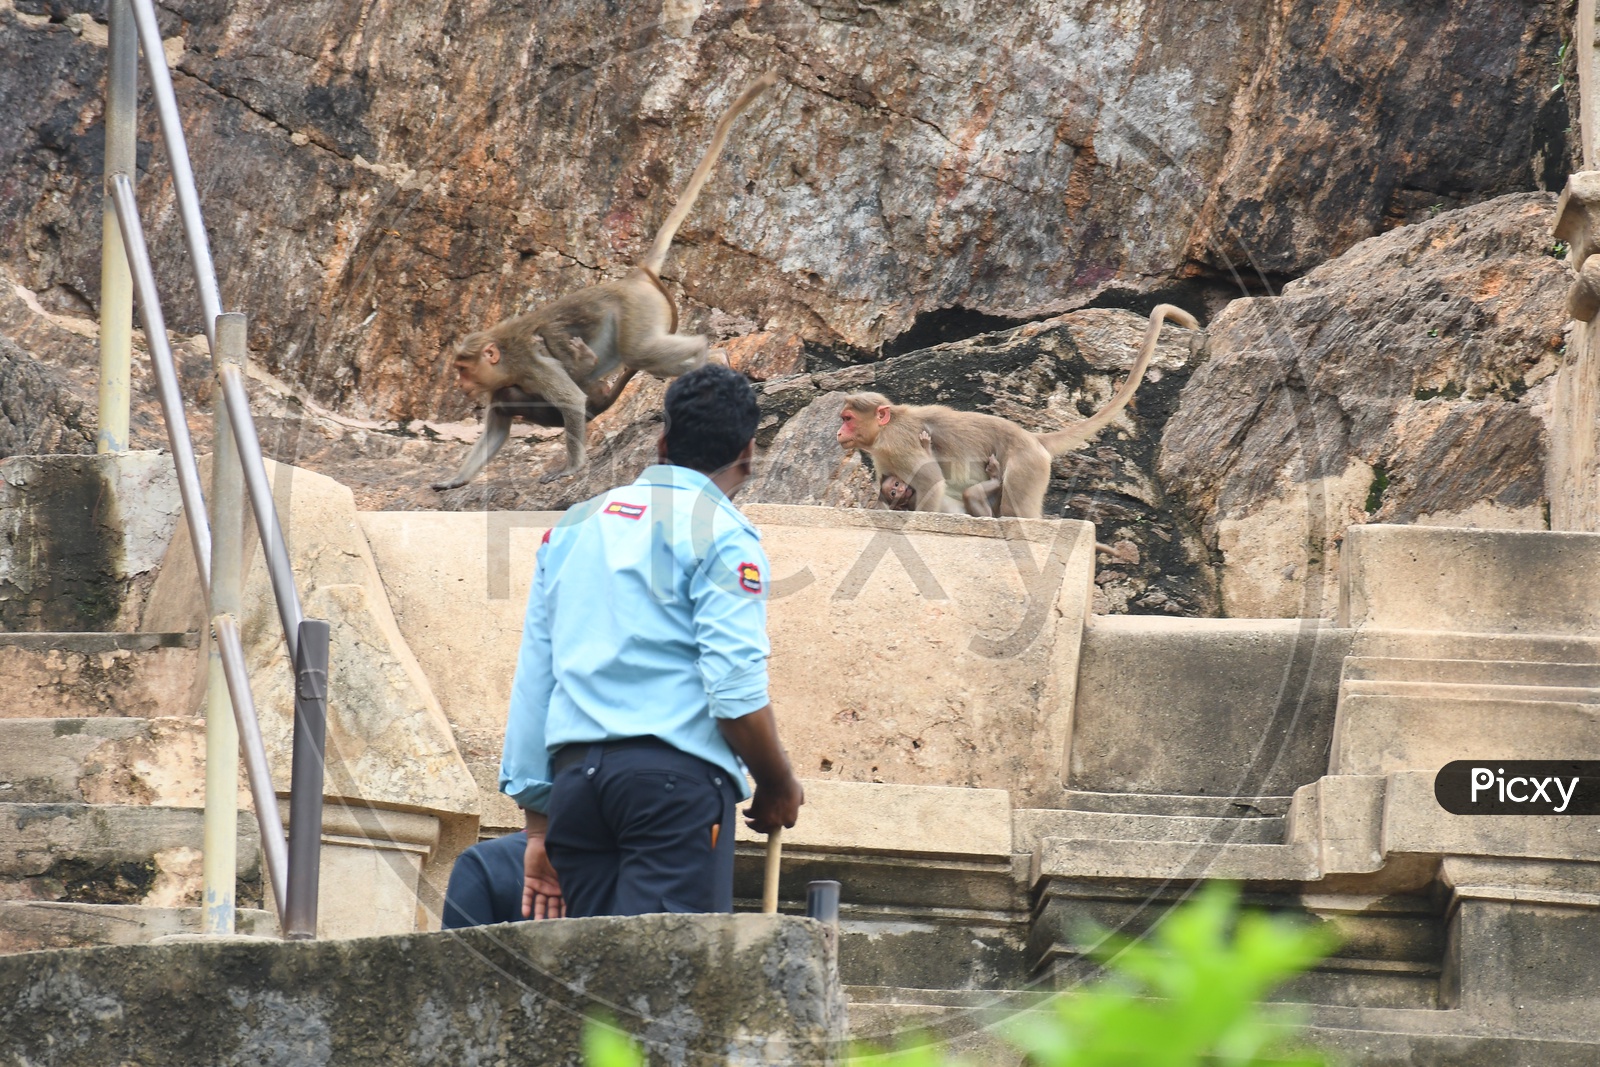 Indian Security Man tackling Monkeys